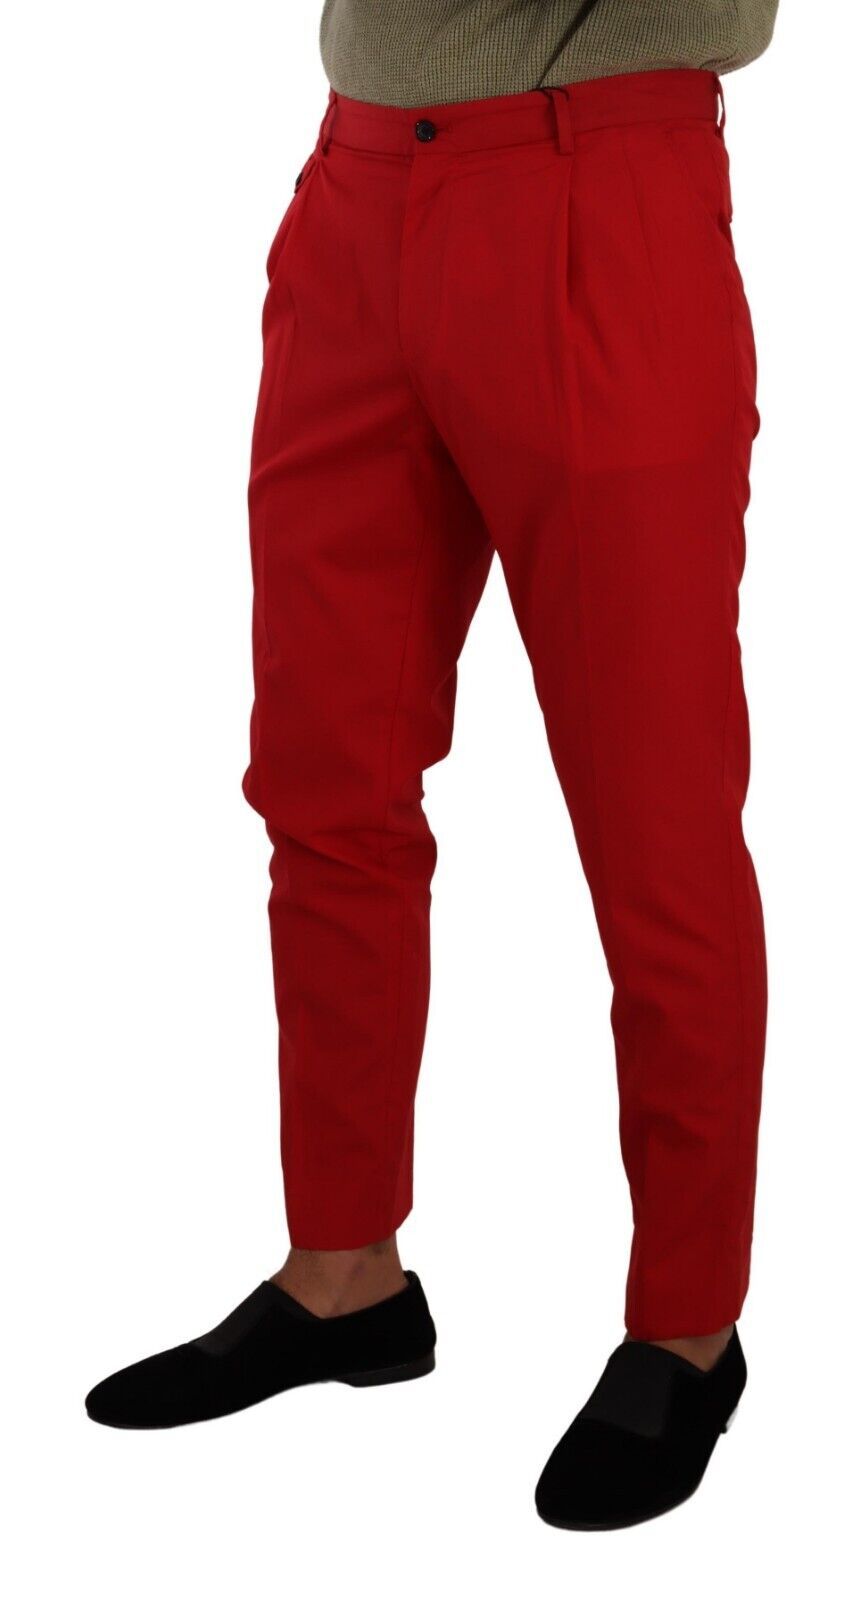 Chic Red Cotton Slim Fit Dress Pants